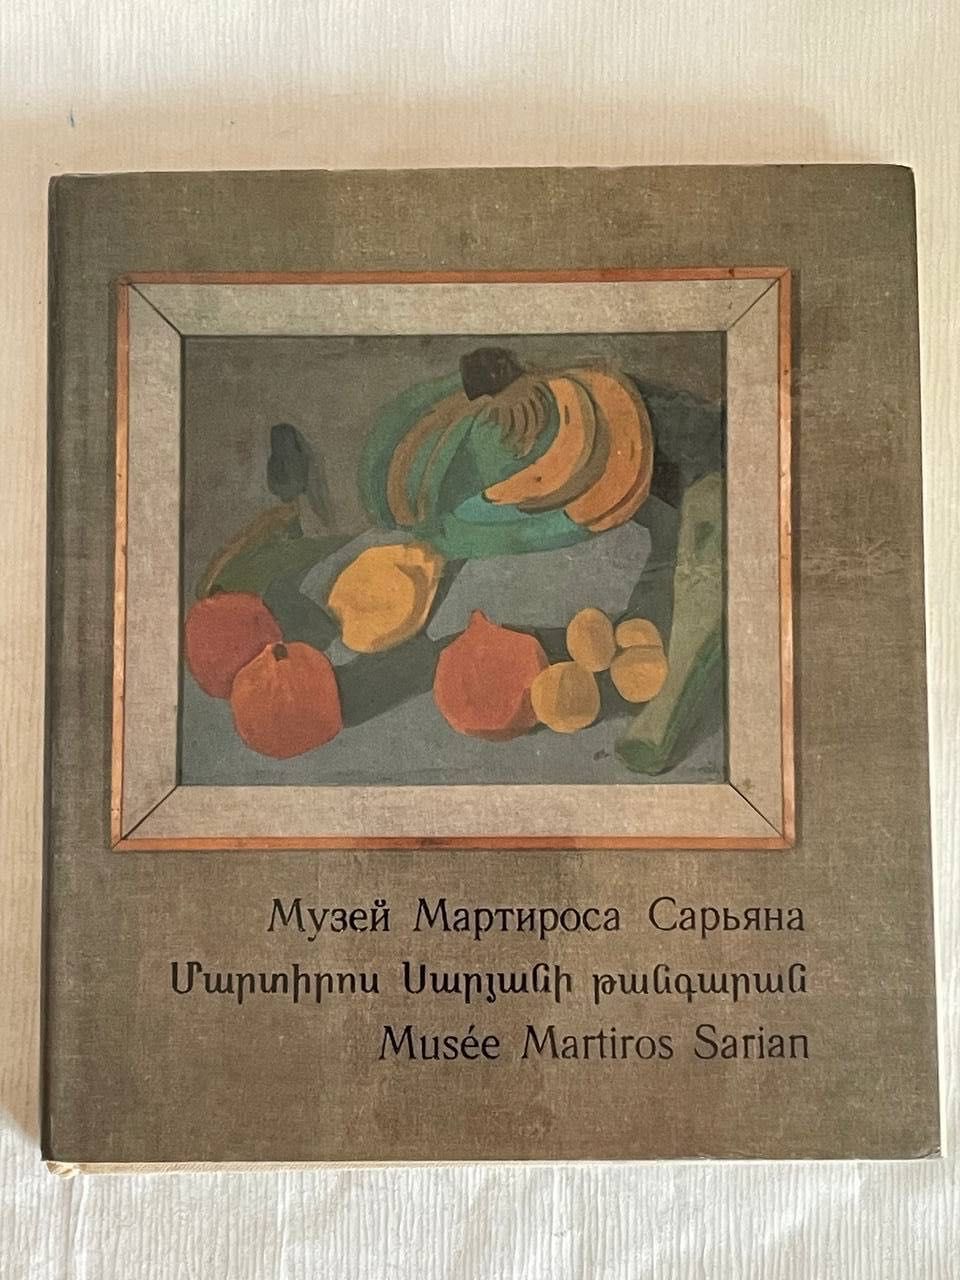 Музей Мартироса Сарьяна. Musee Martiros Sarian. Альбом